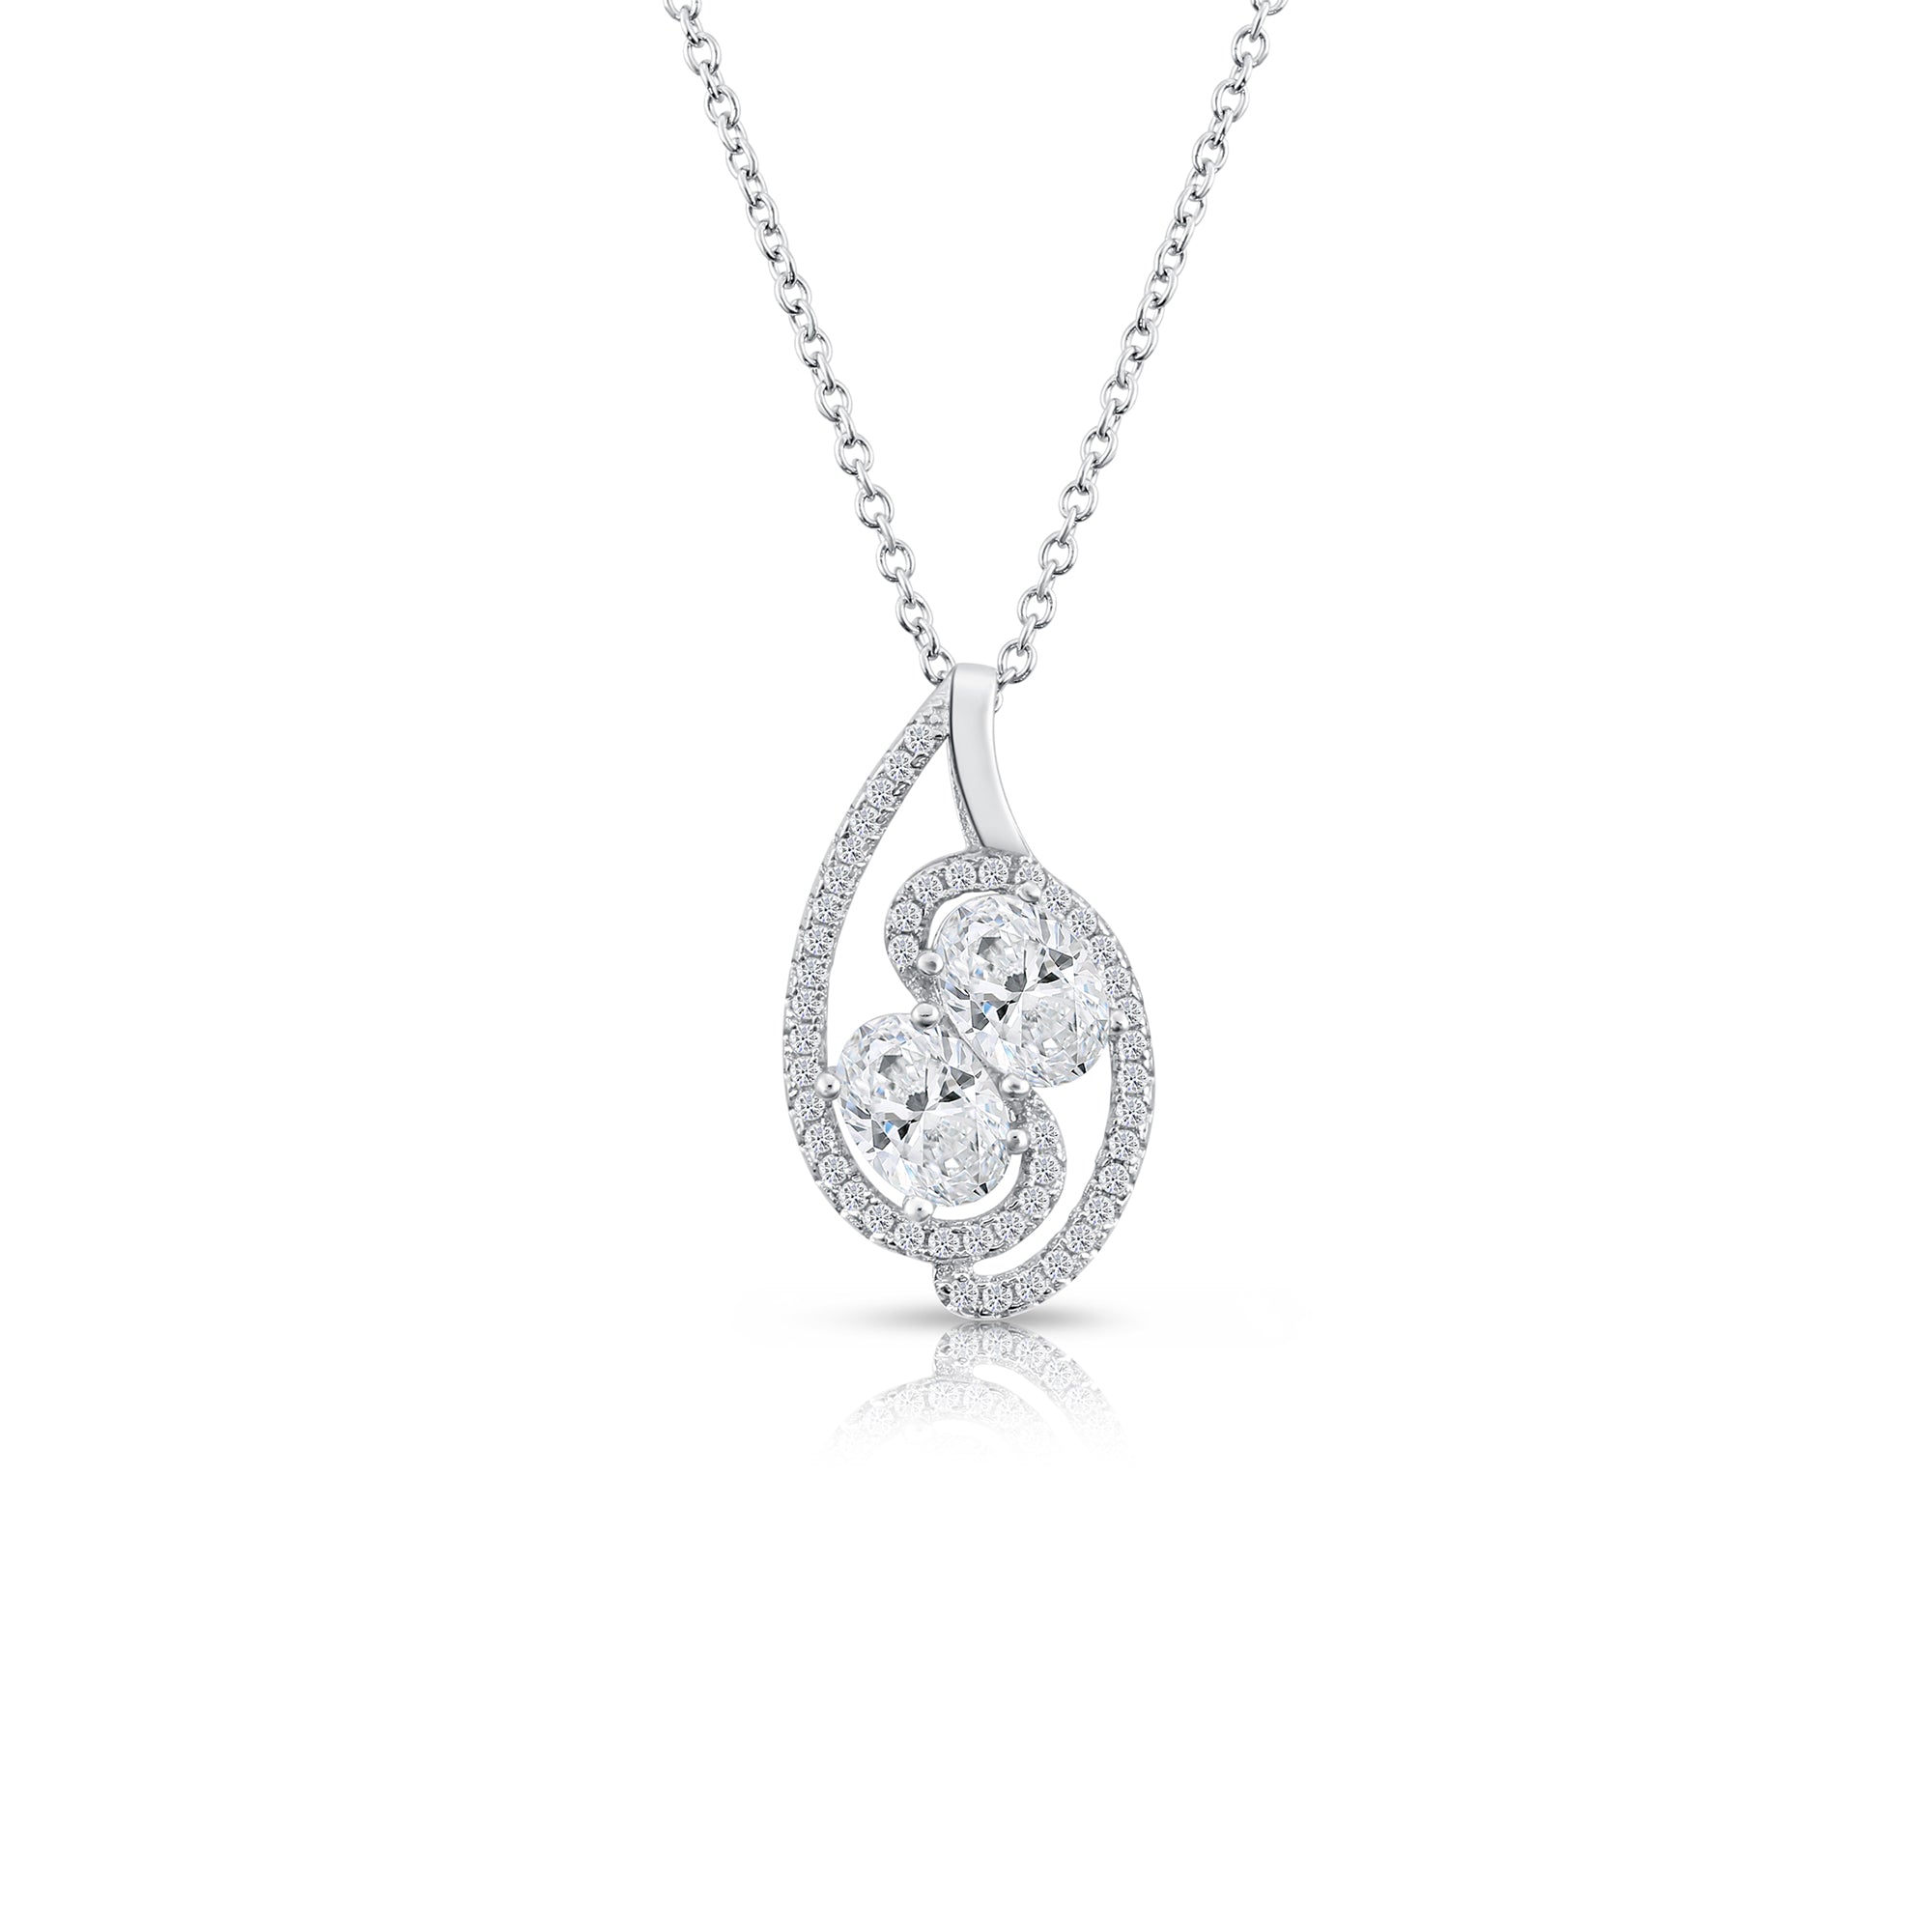 CZ Infinity Teardrop Charm Necklace with Zircona in Sterling Silver